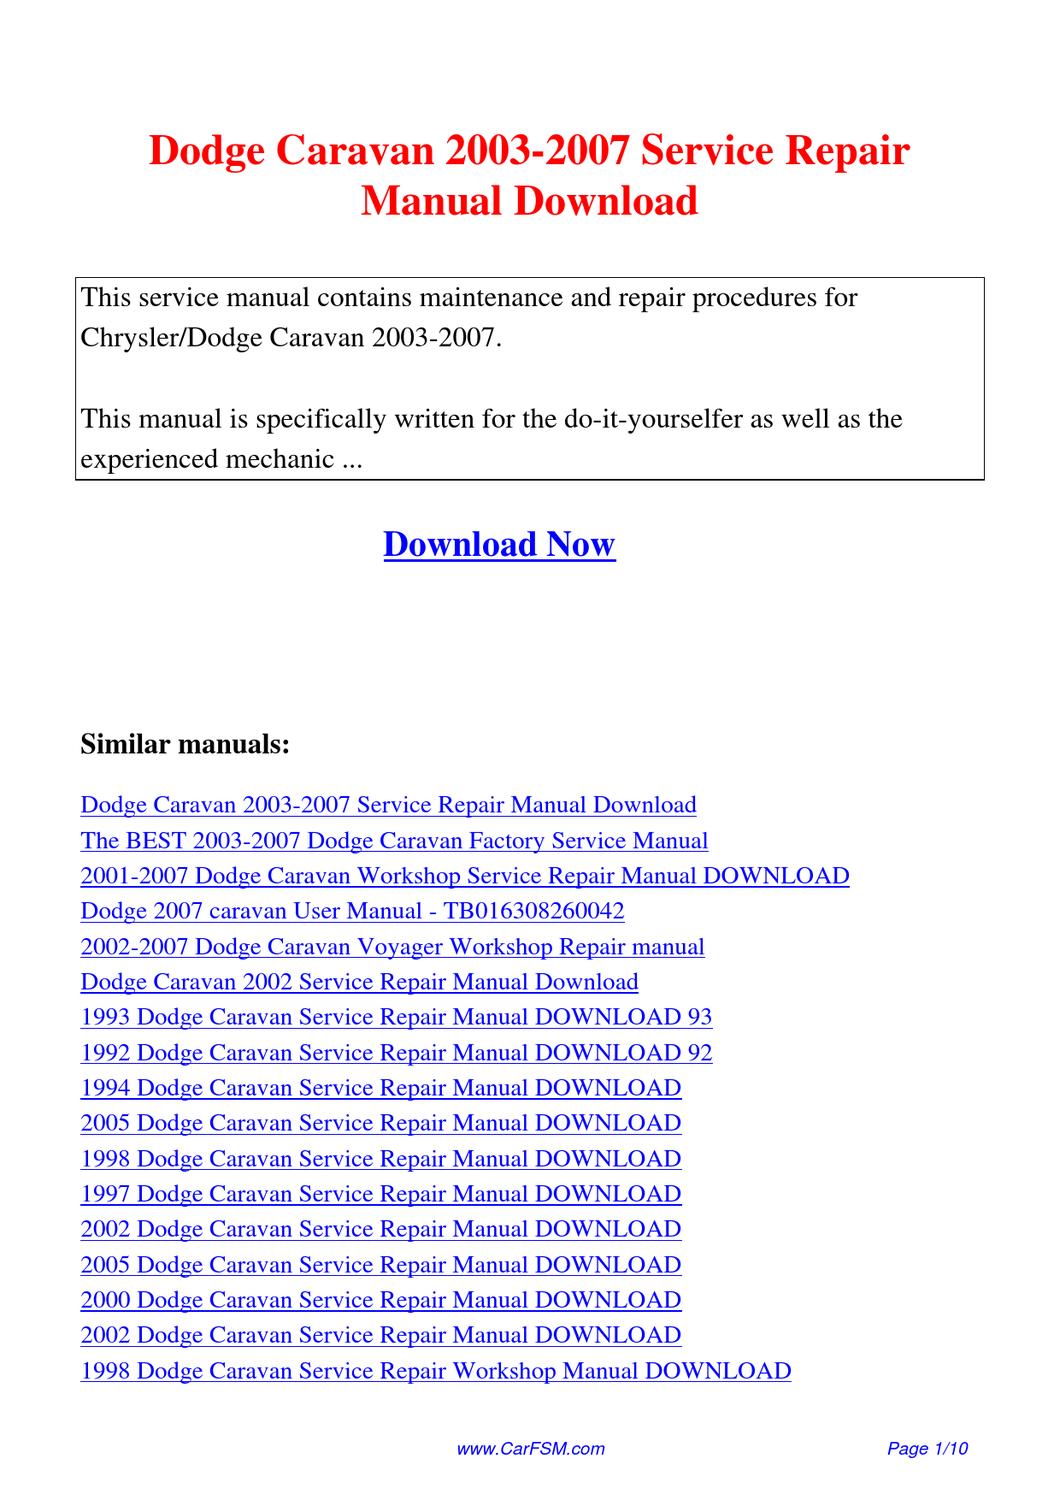 2005 dodge caravan manual download sites